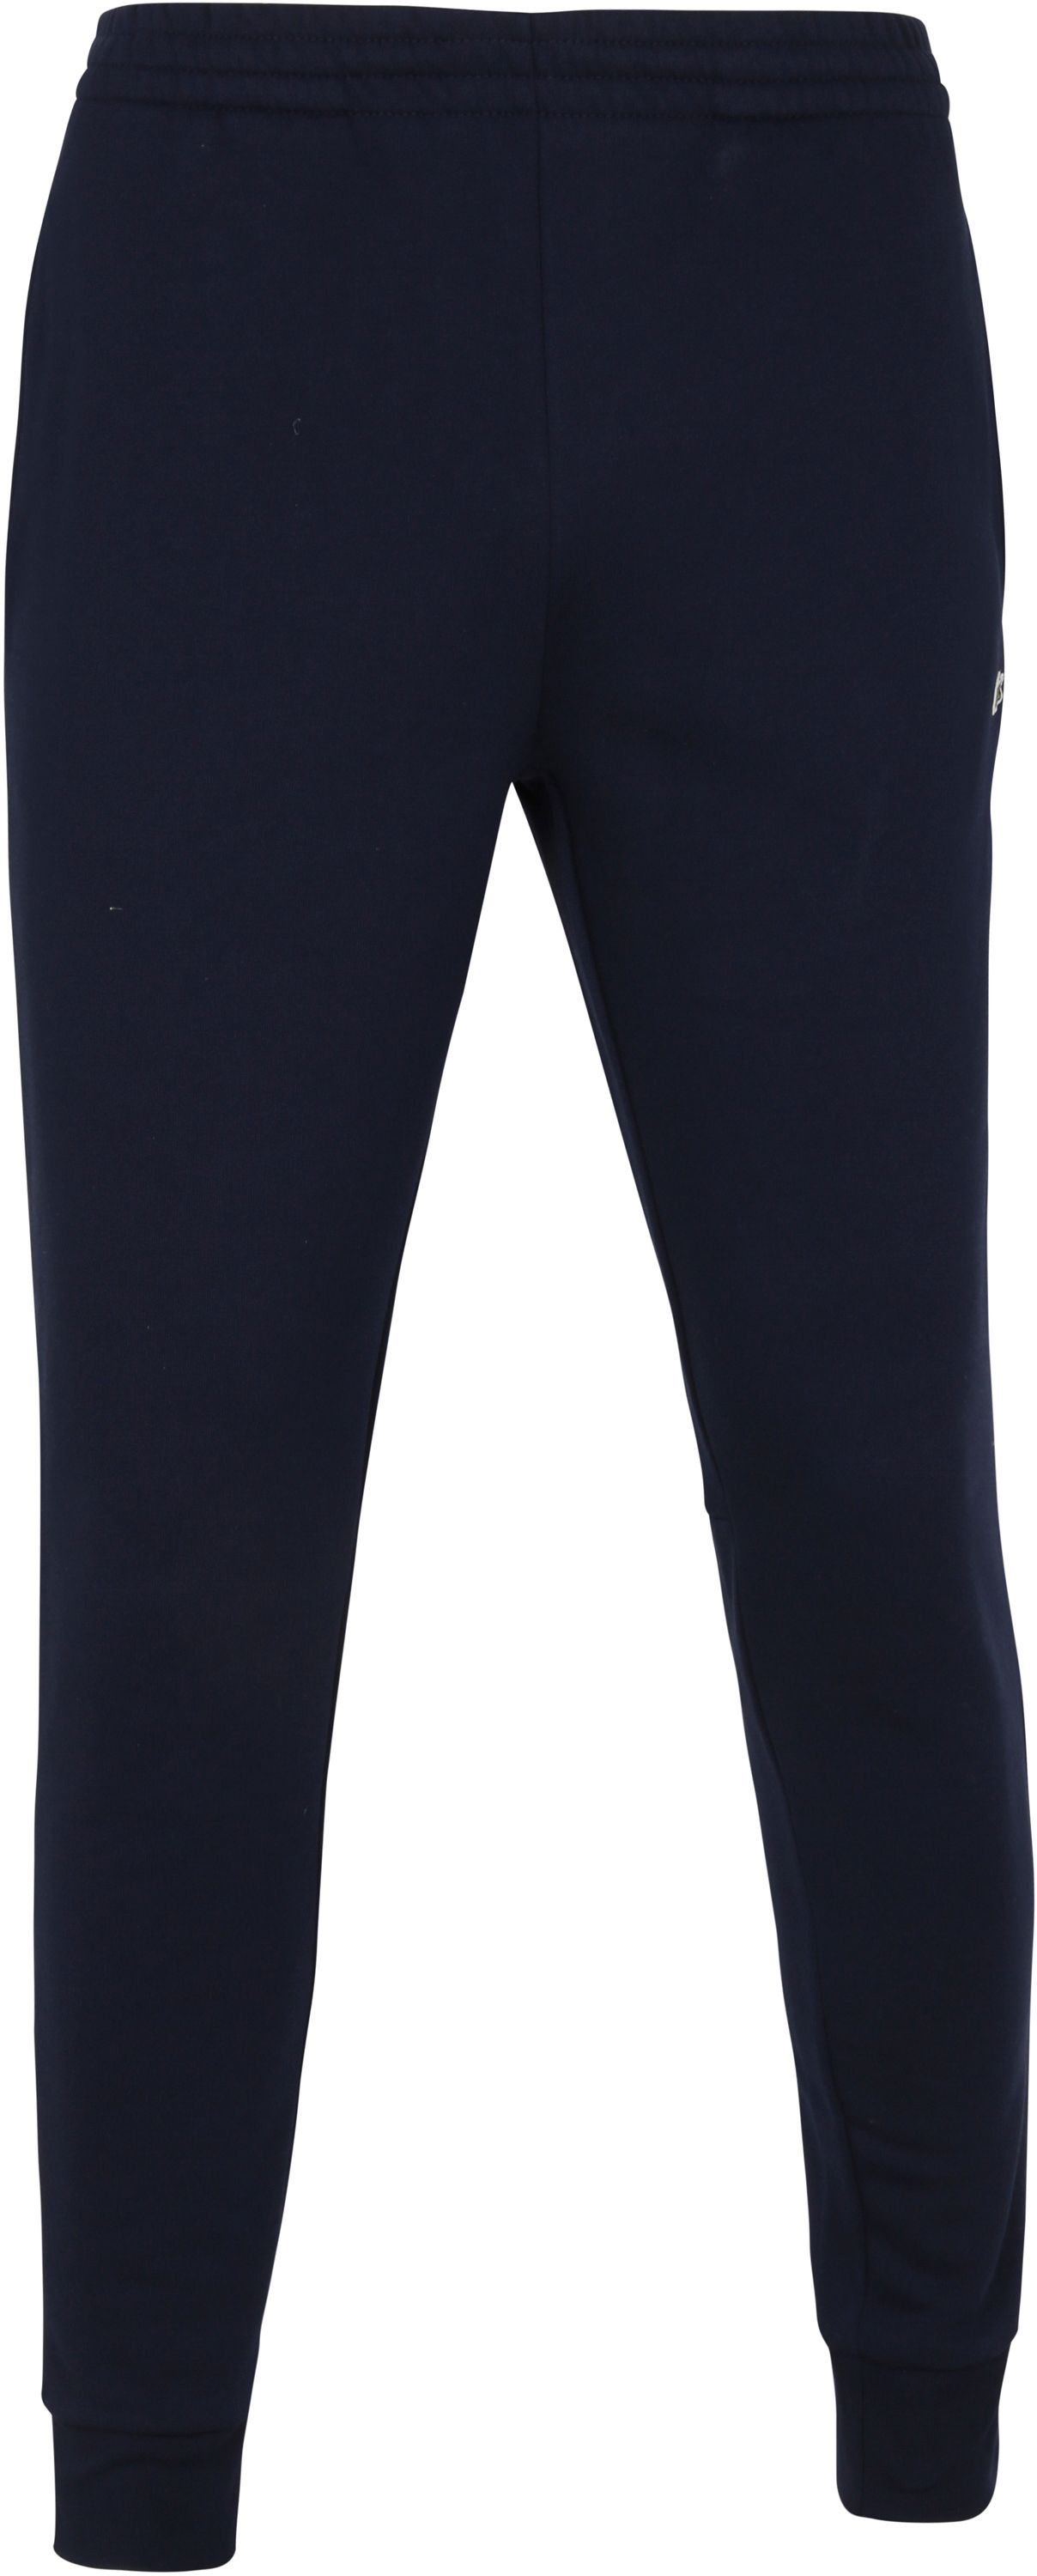 Lacoste Sweatpants Navy  Blue Dark Blue size L